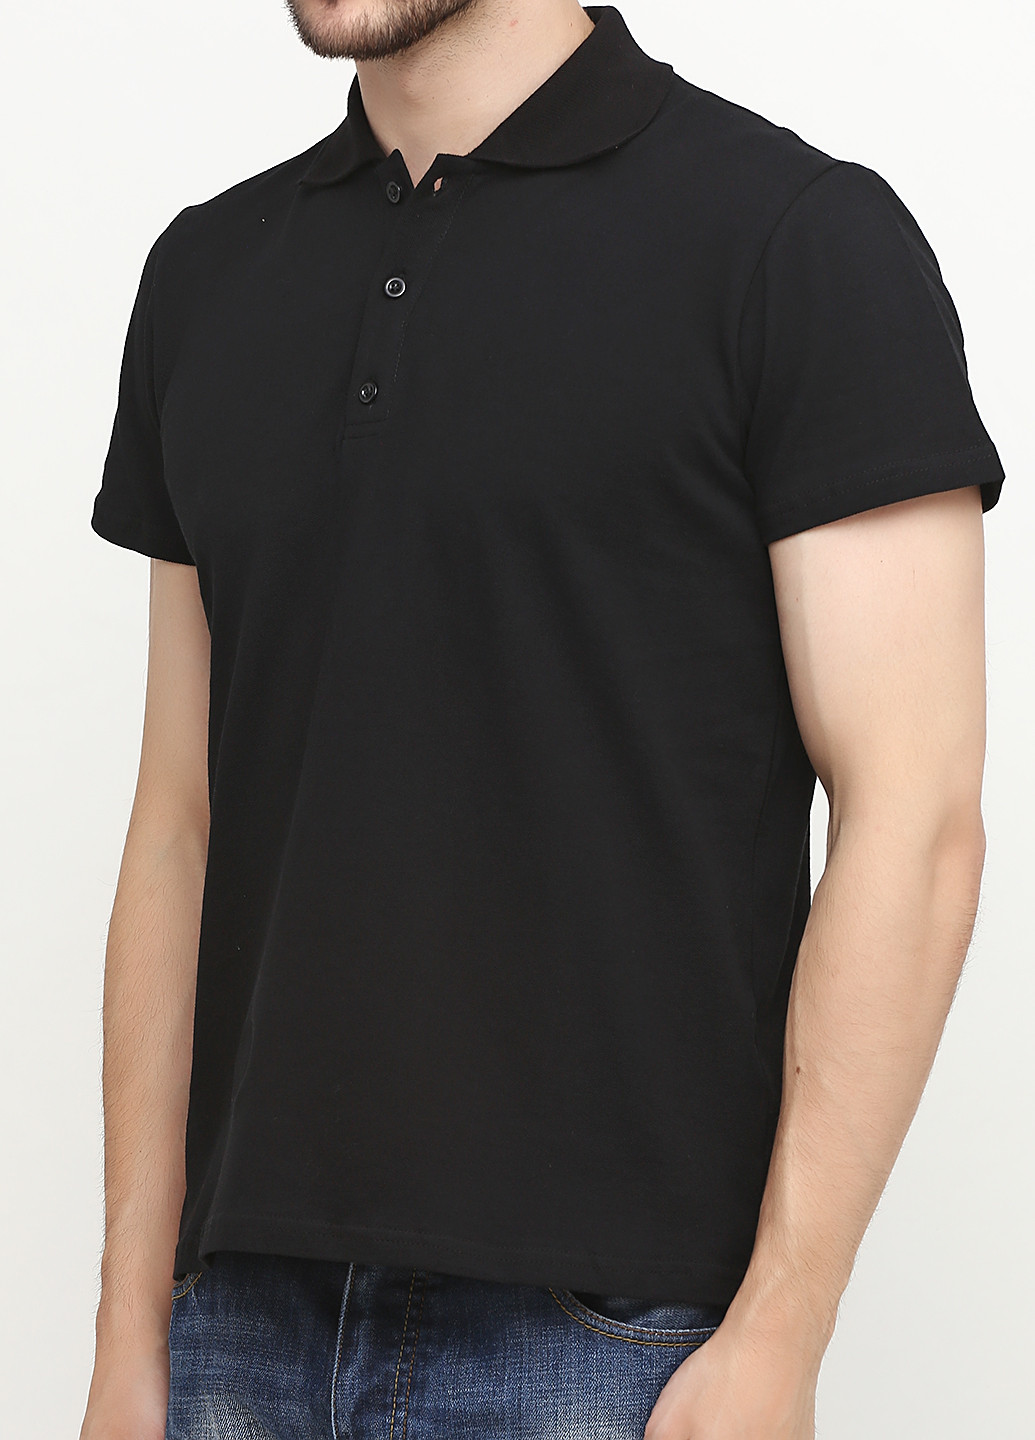 Черная футболка-поло для мужчин Manatki однотонная